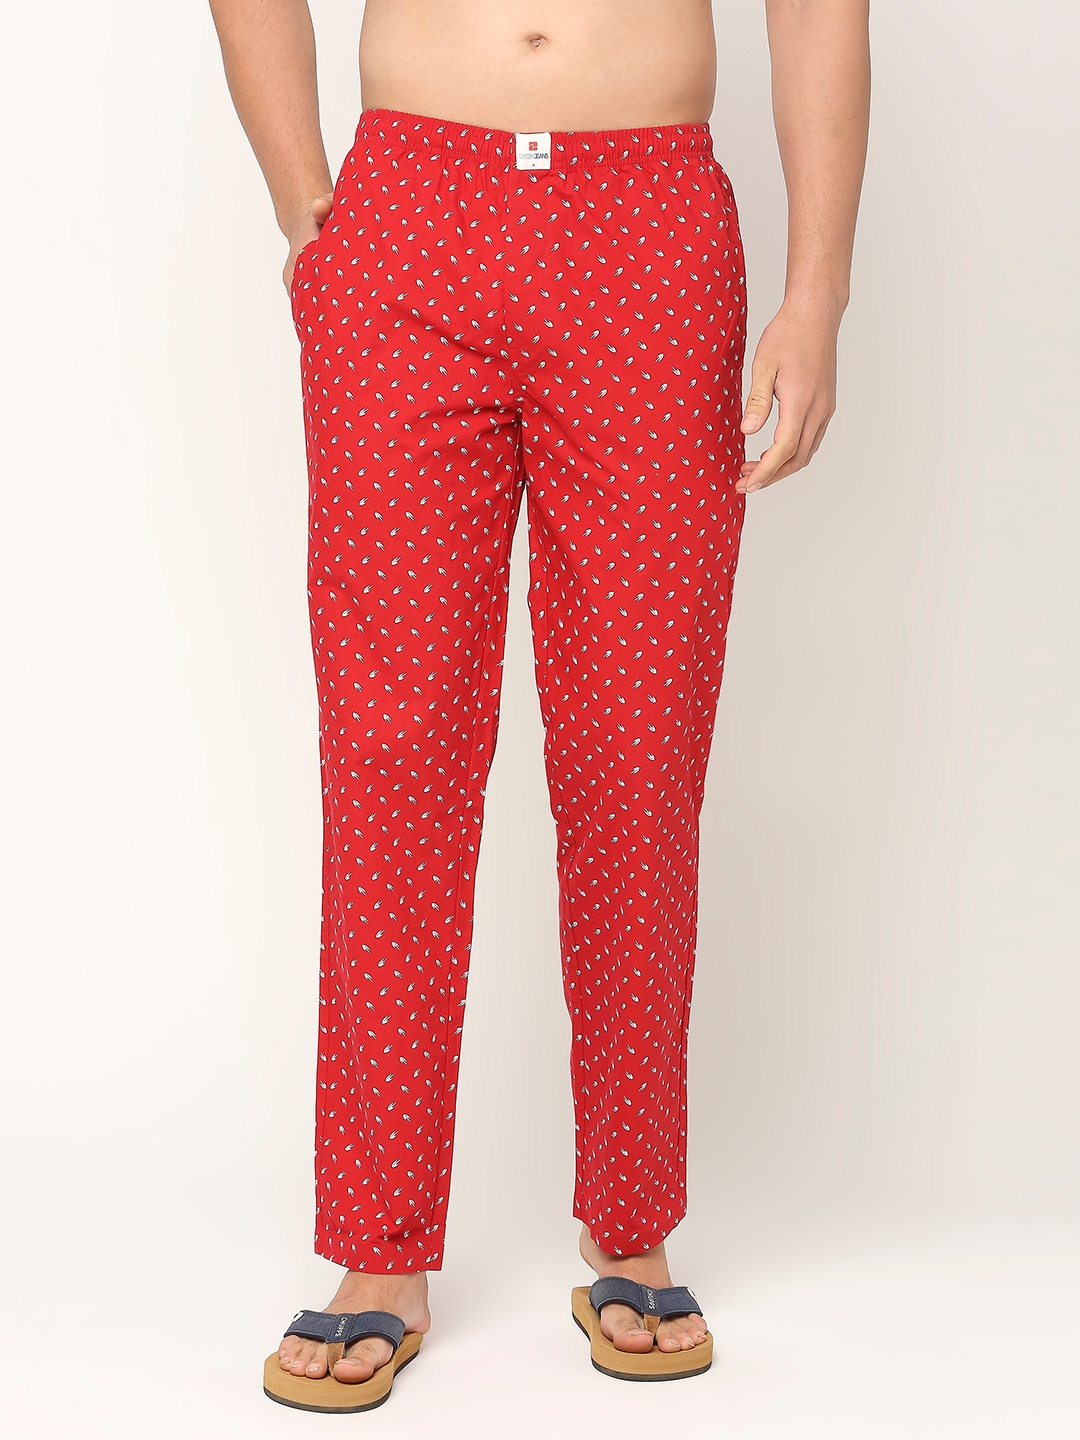 Underjeans by Spykar Premium Cotton Printed Men Red Pyjama